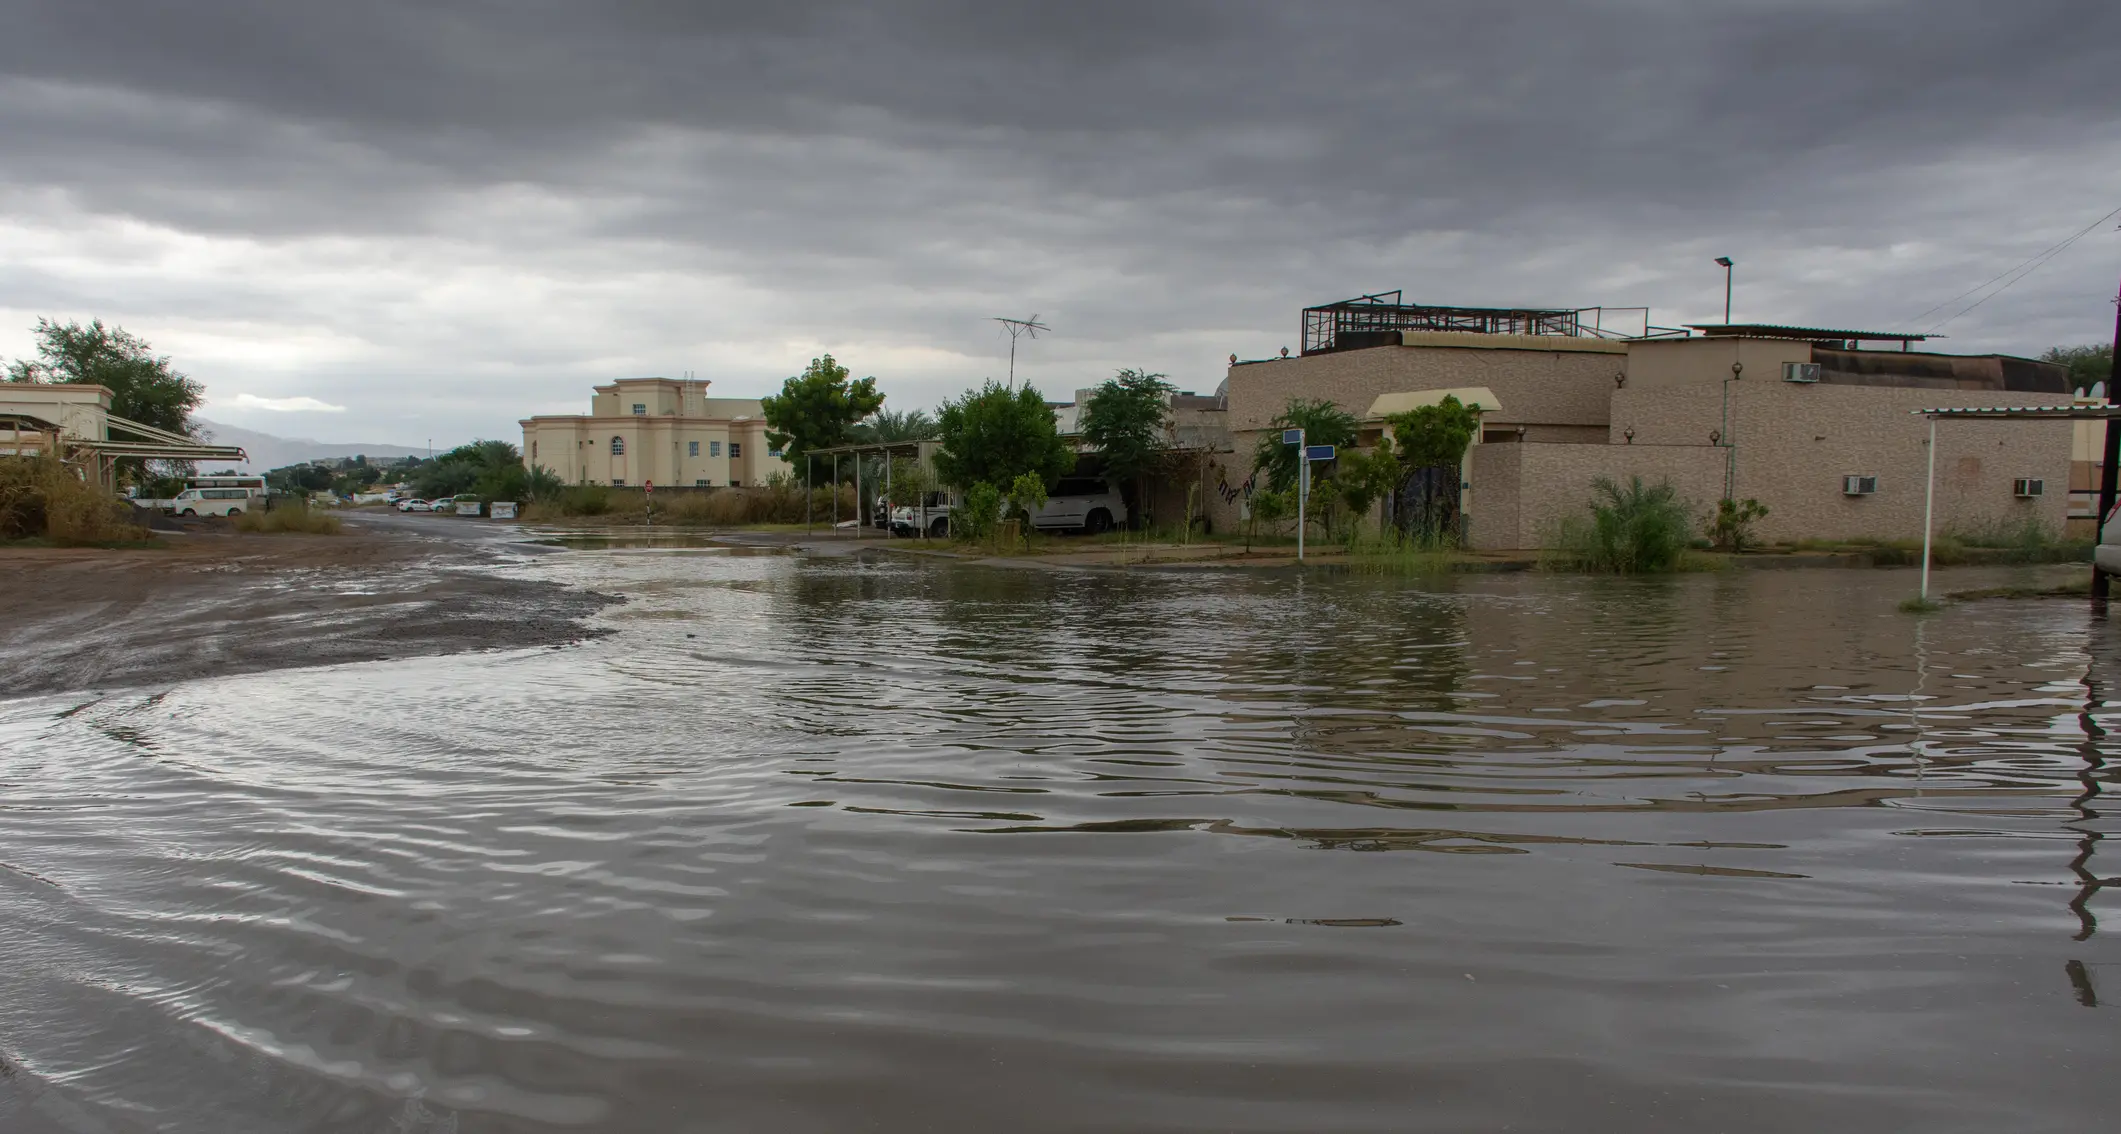 Expect more extreme weather threats like UAE floods worldwide – Climate expert